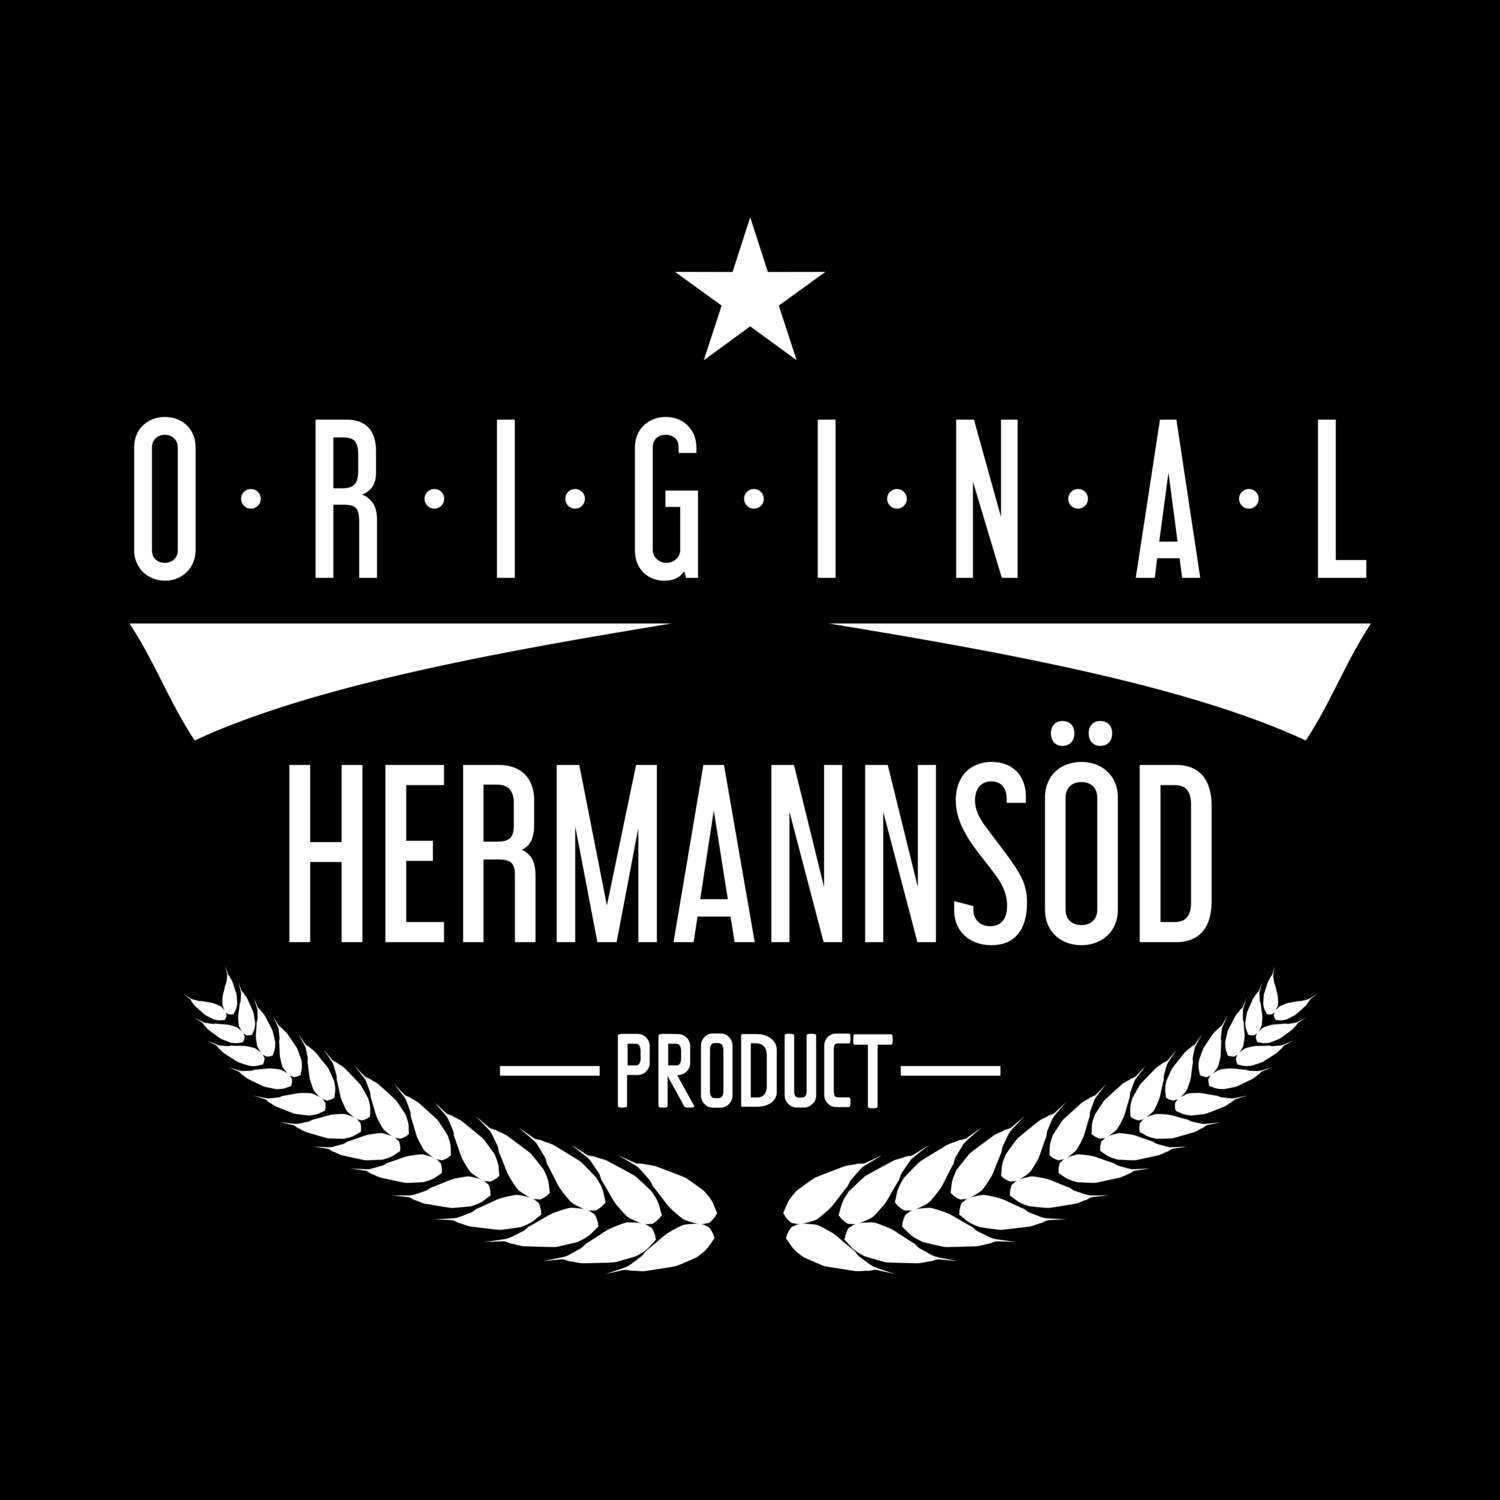 Hermannsöd T-Shirt »Original Product«